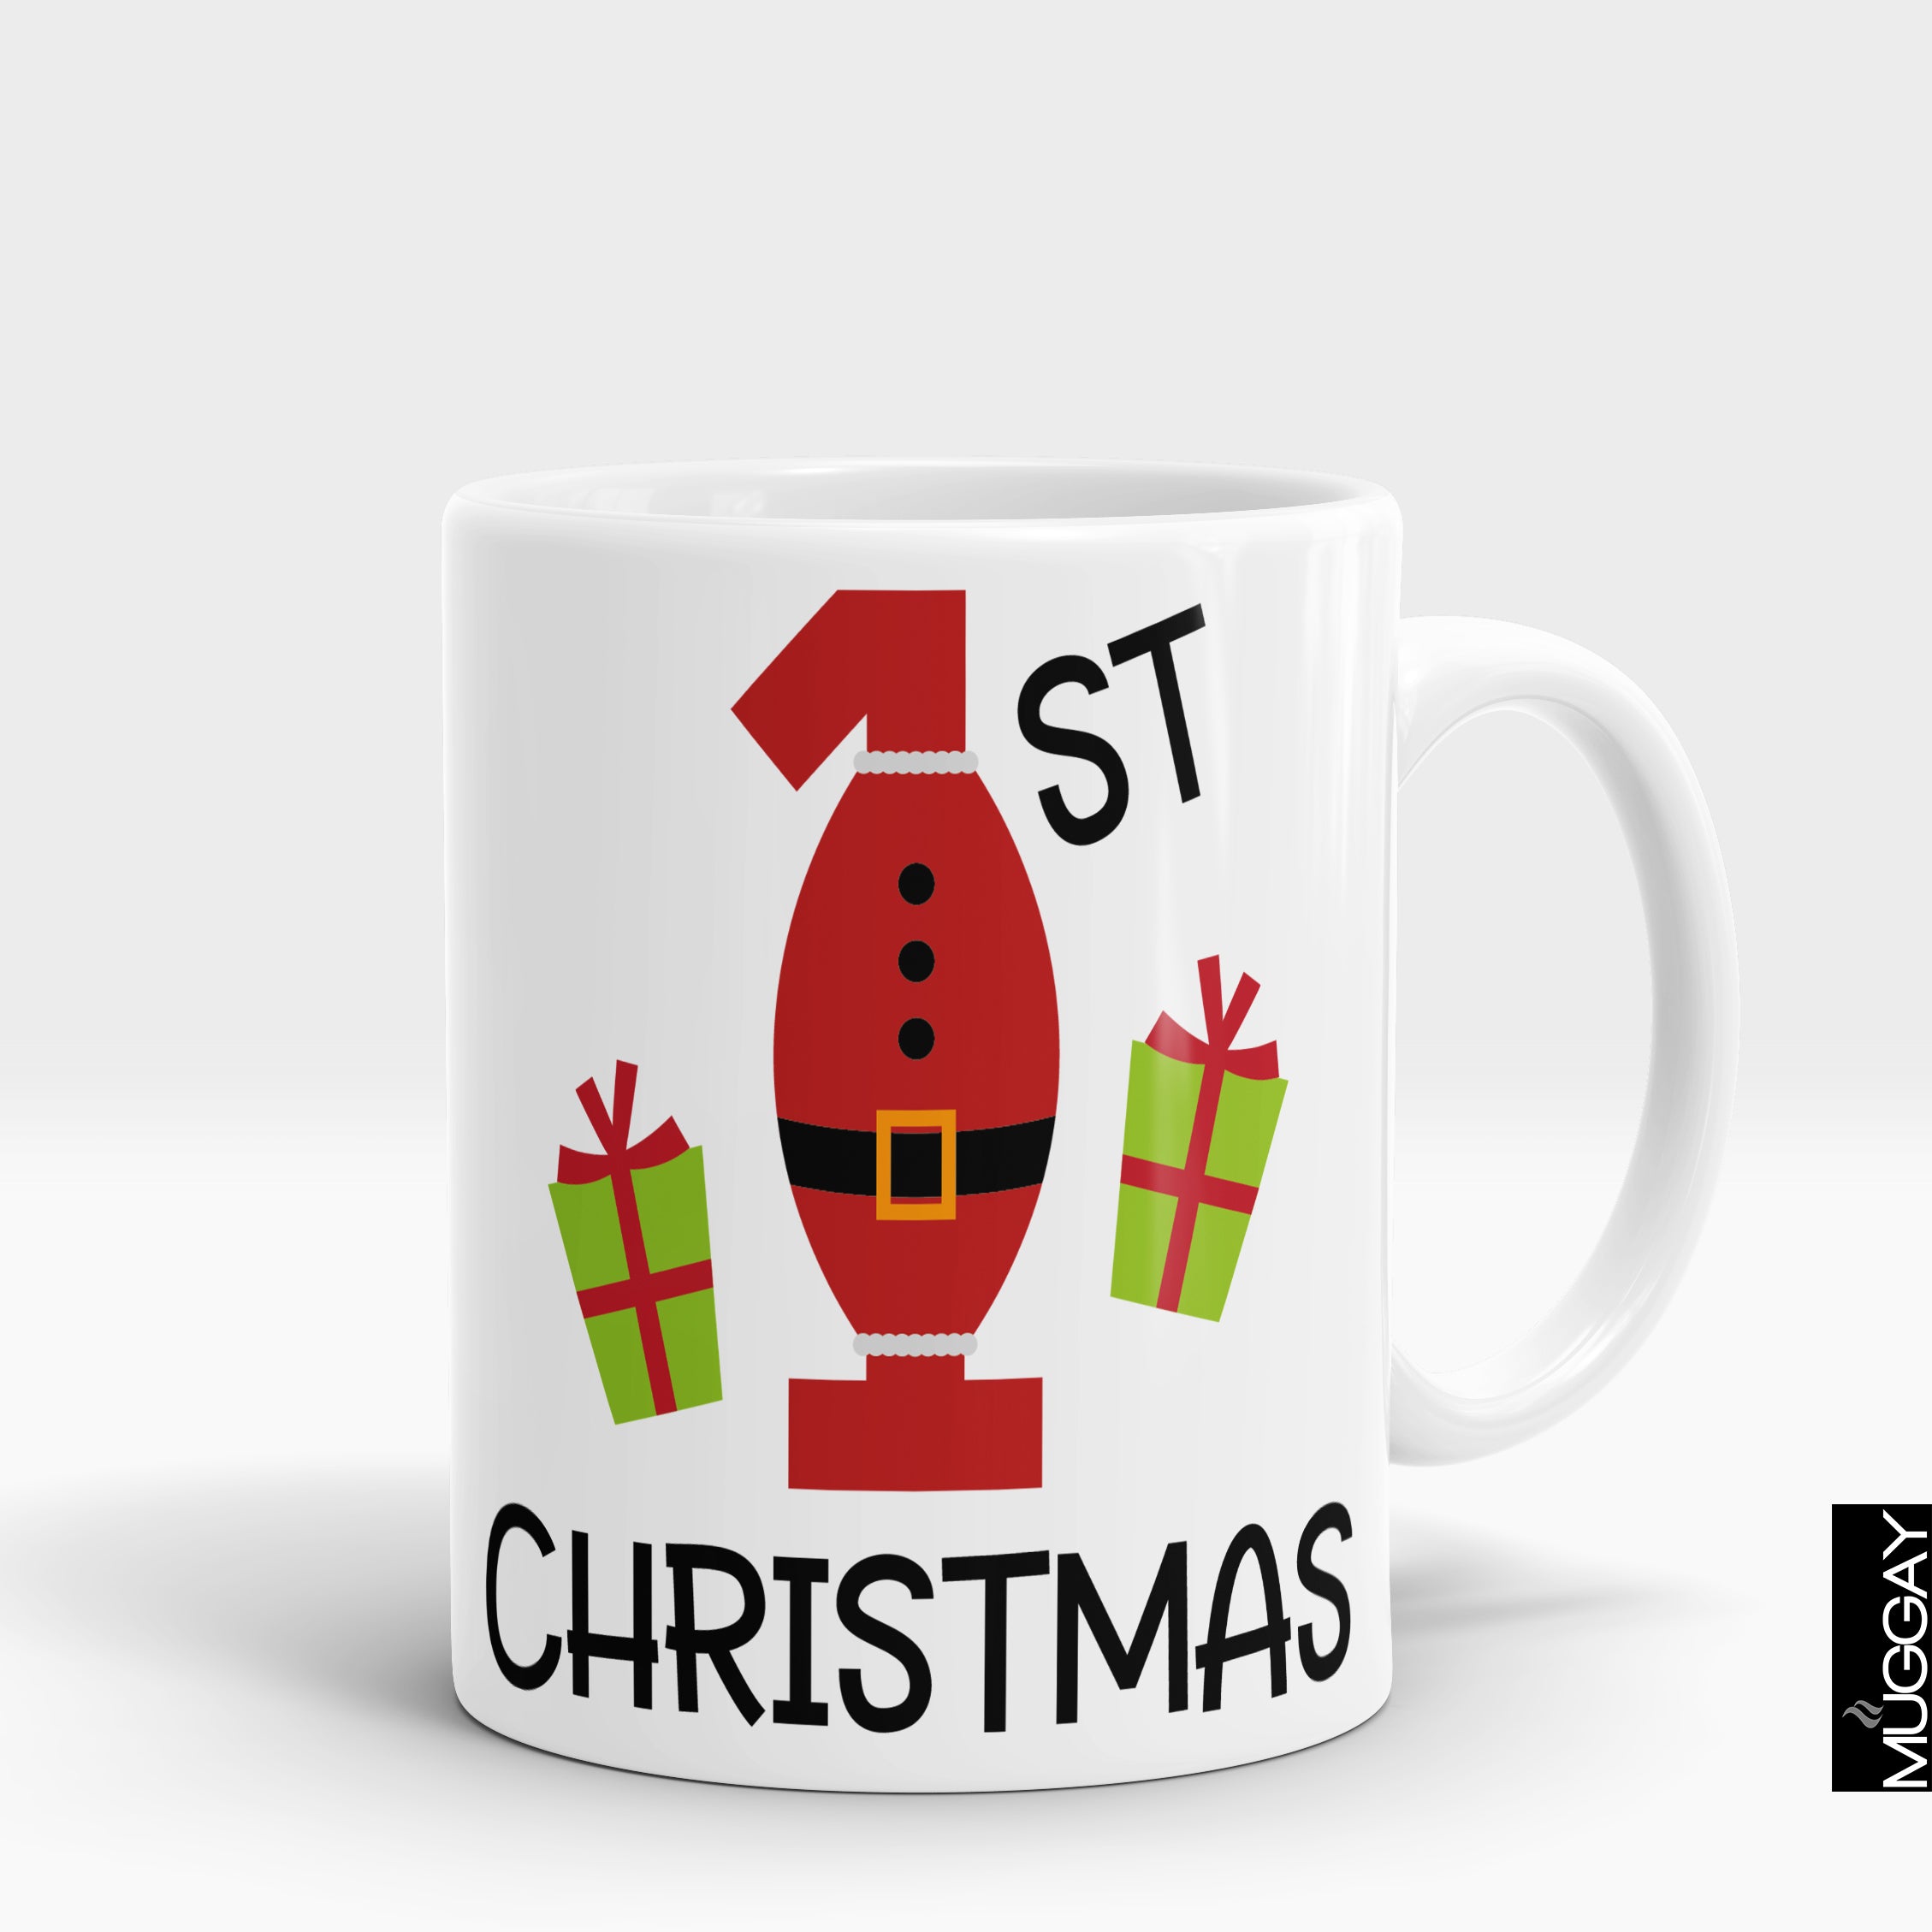 1st Christmas Mug - Muggay.com - Mugs - Printing shop - truck Art mugs - Mug printing - Customized printing - Digital printing - Muggay 